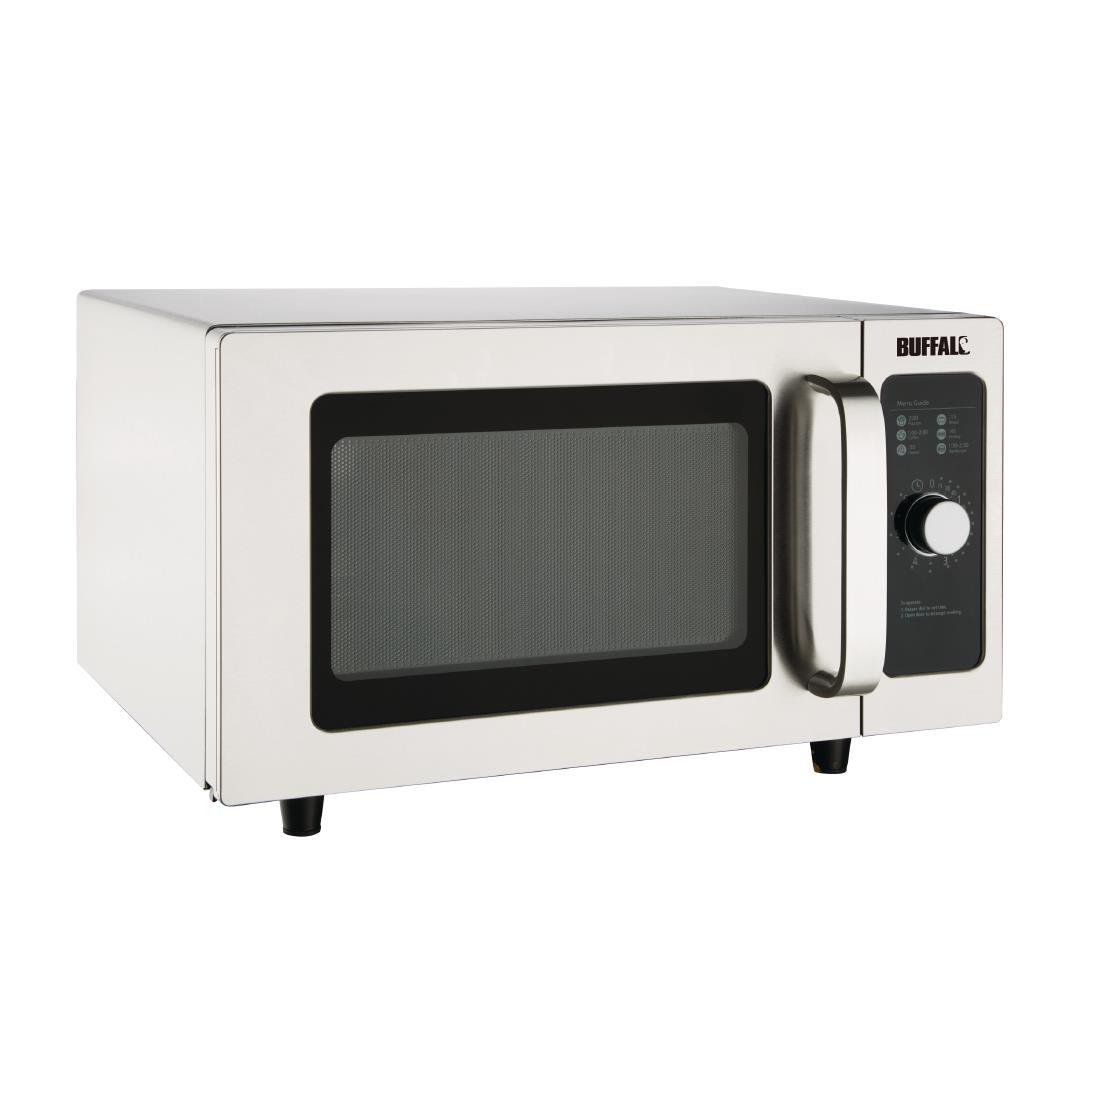 Buffalo Manual Commercial Microwave 25ltr 1000W - FB861  - 4